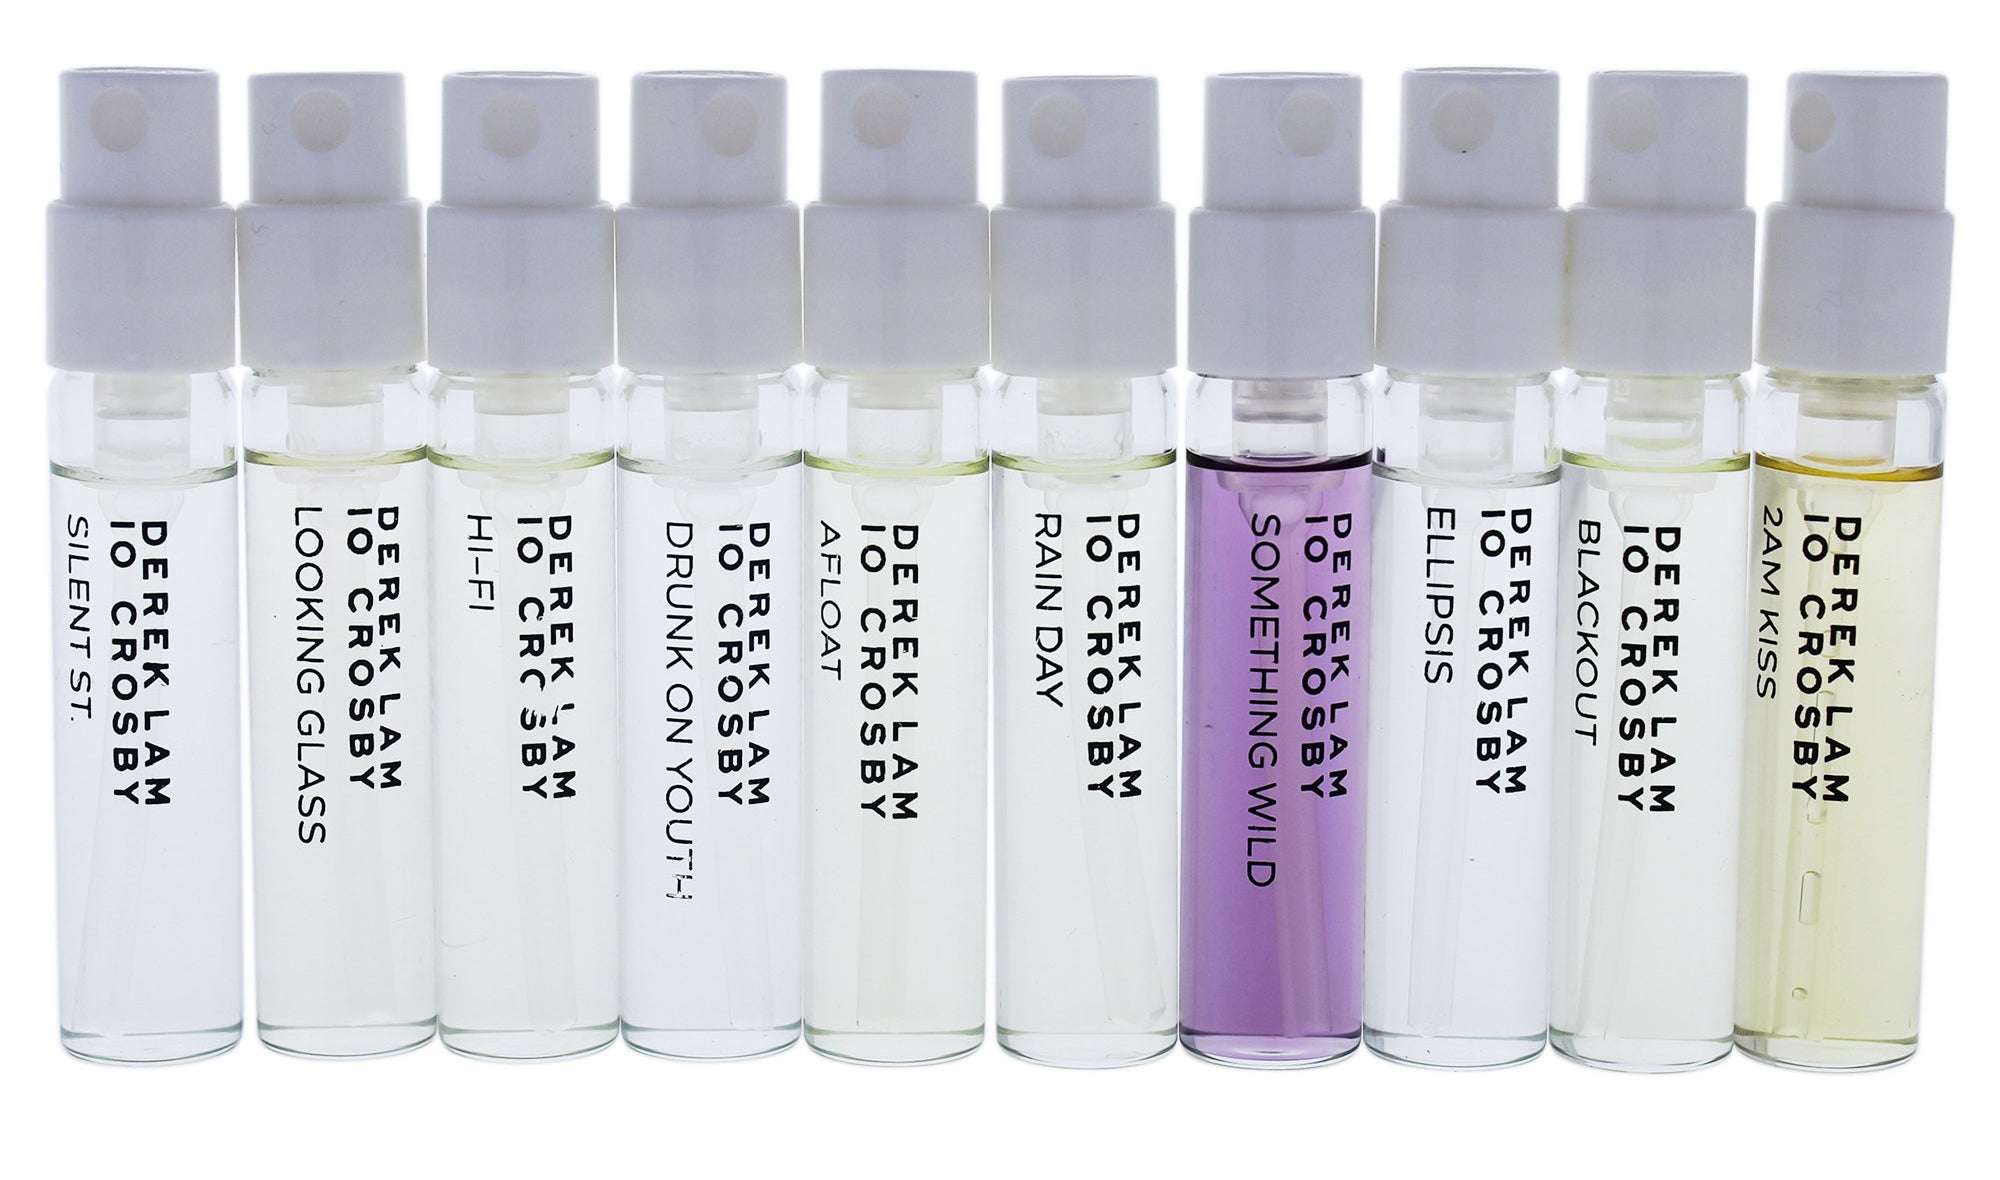 The ten-piece roll-on Derek Lam perfume set